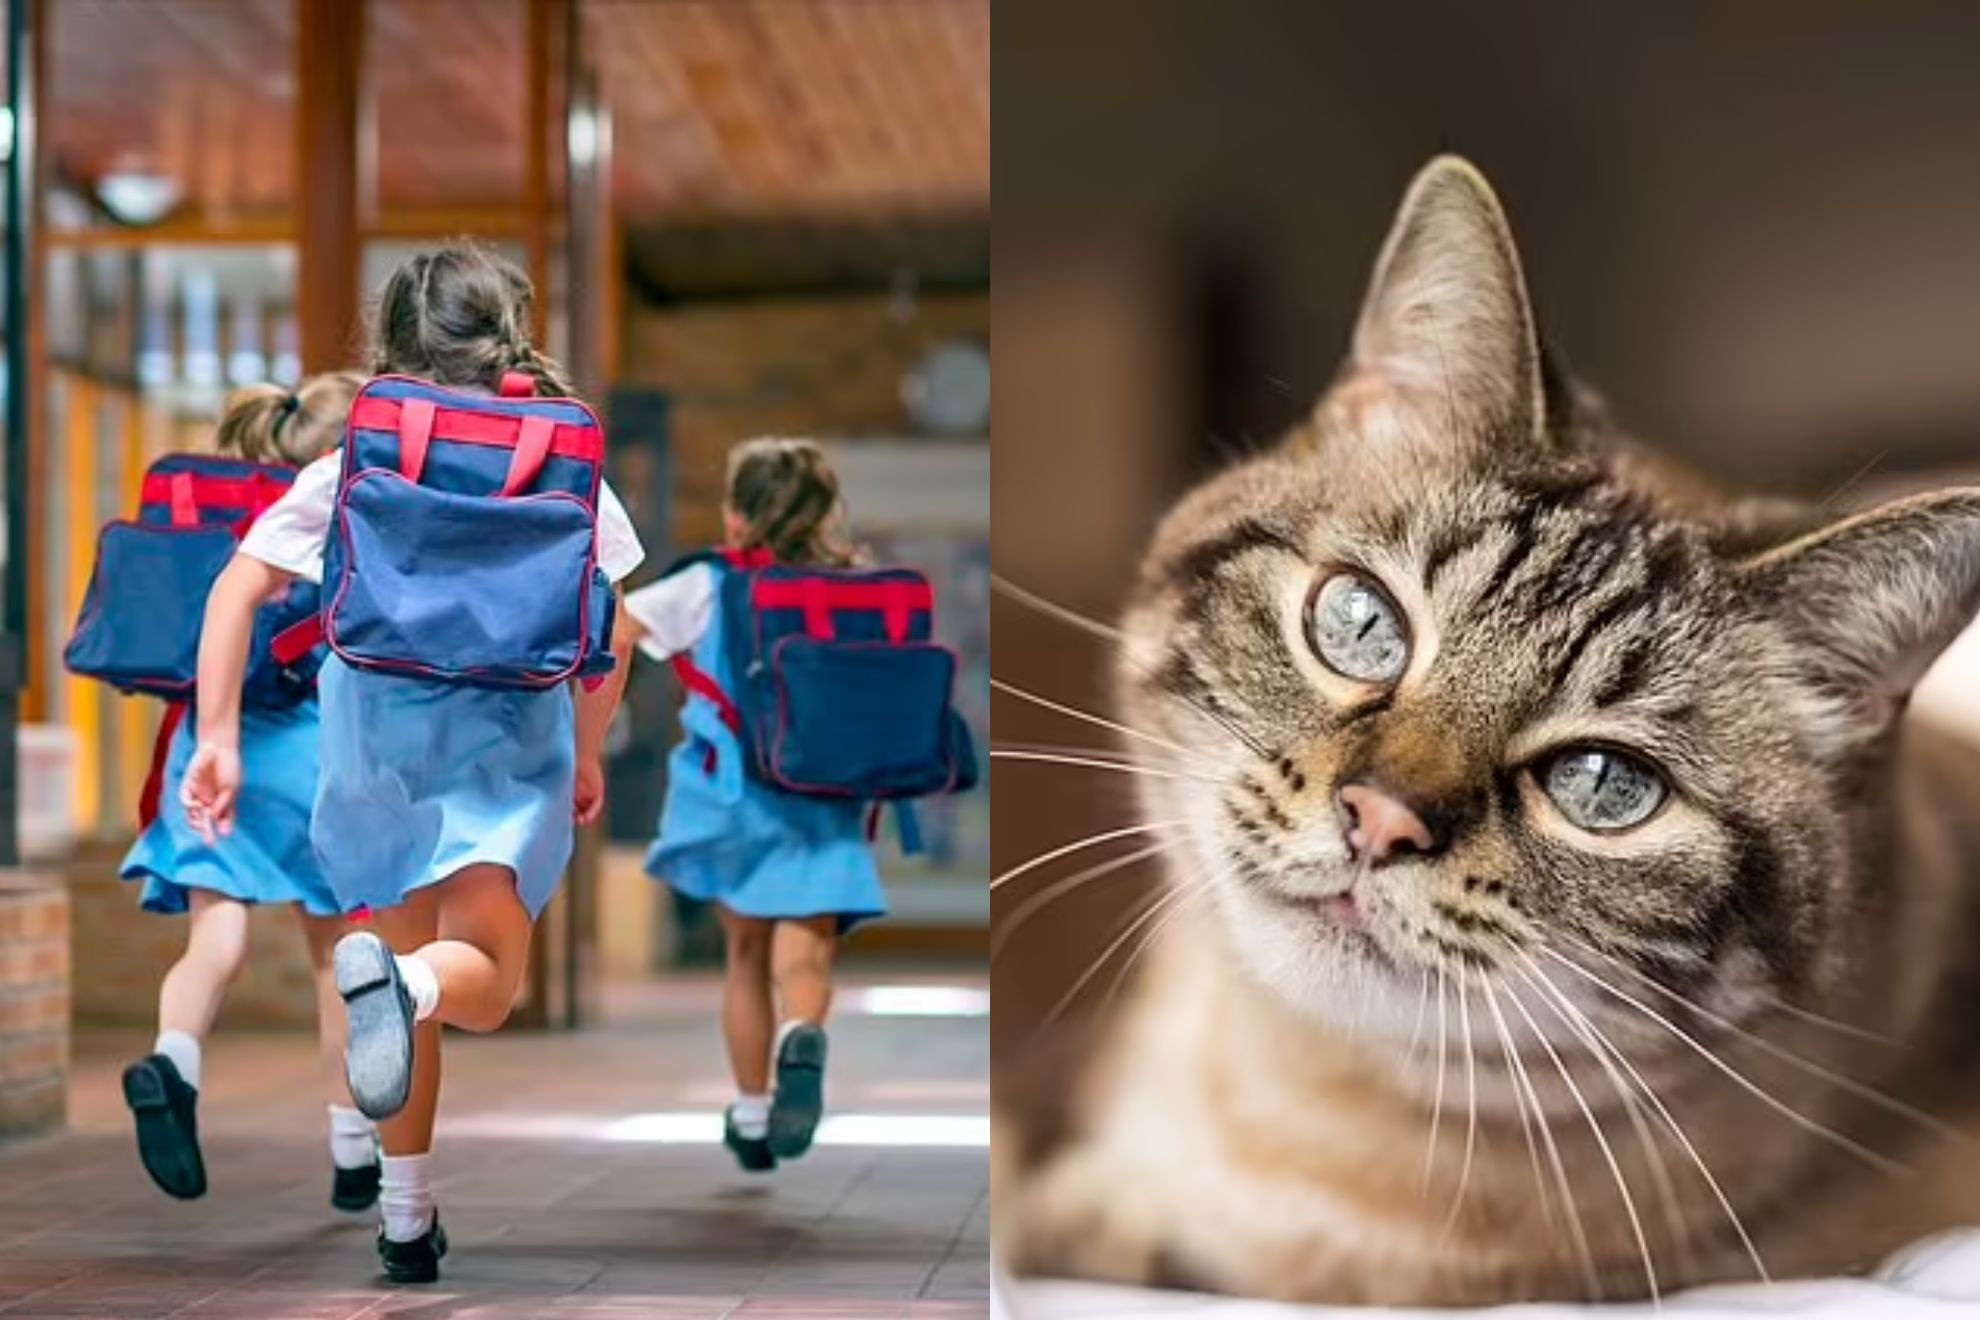 Adolescente australiana asegura identificarse como un 'Gato' y se comporta como tal